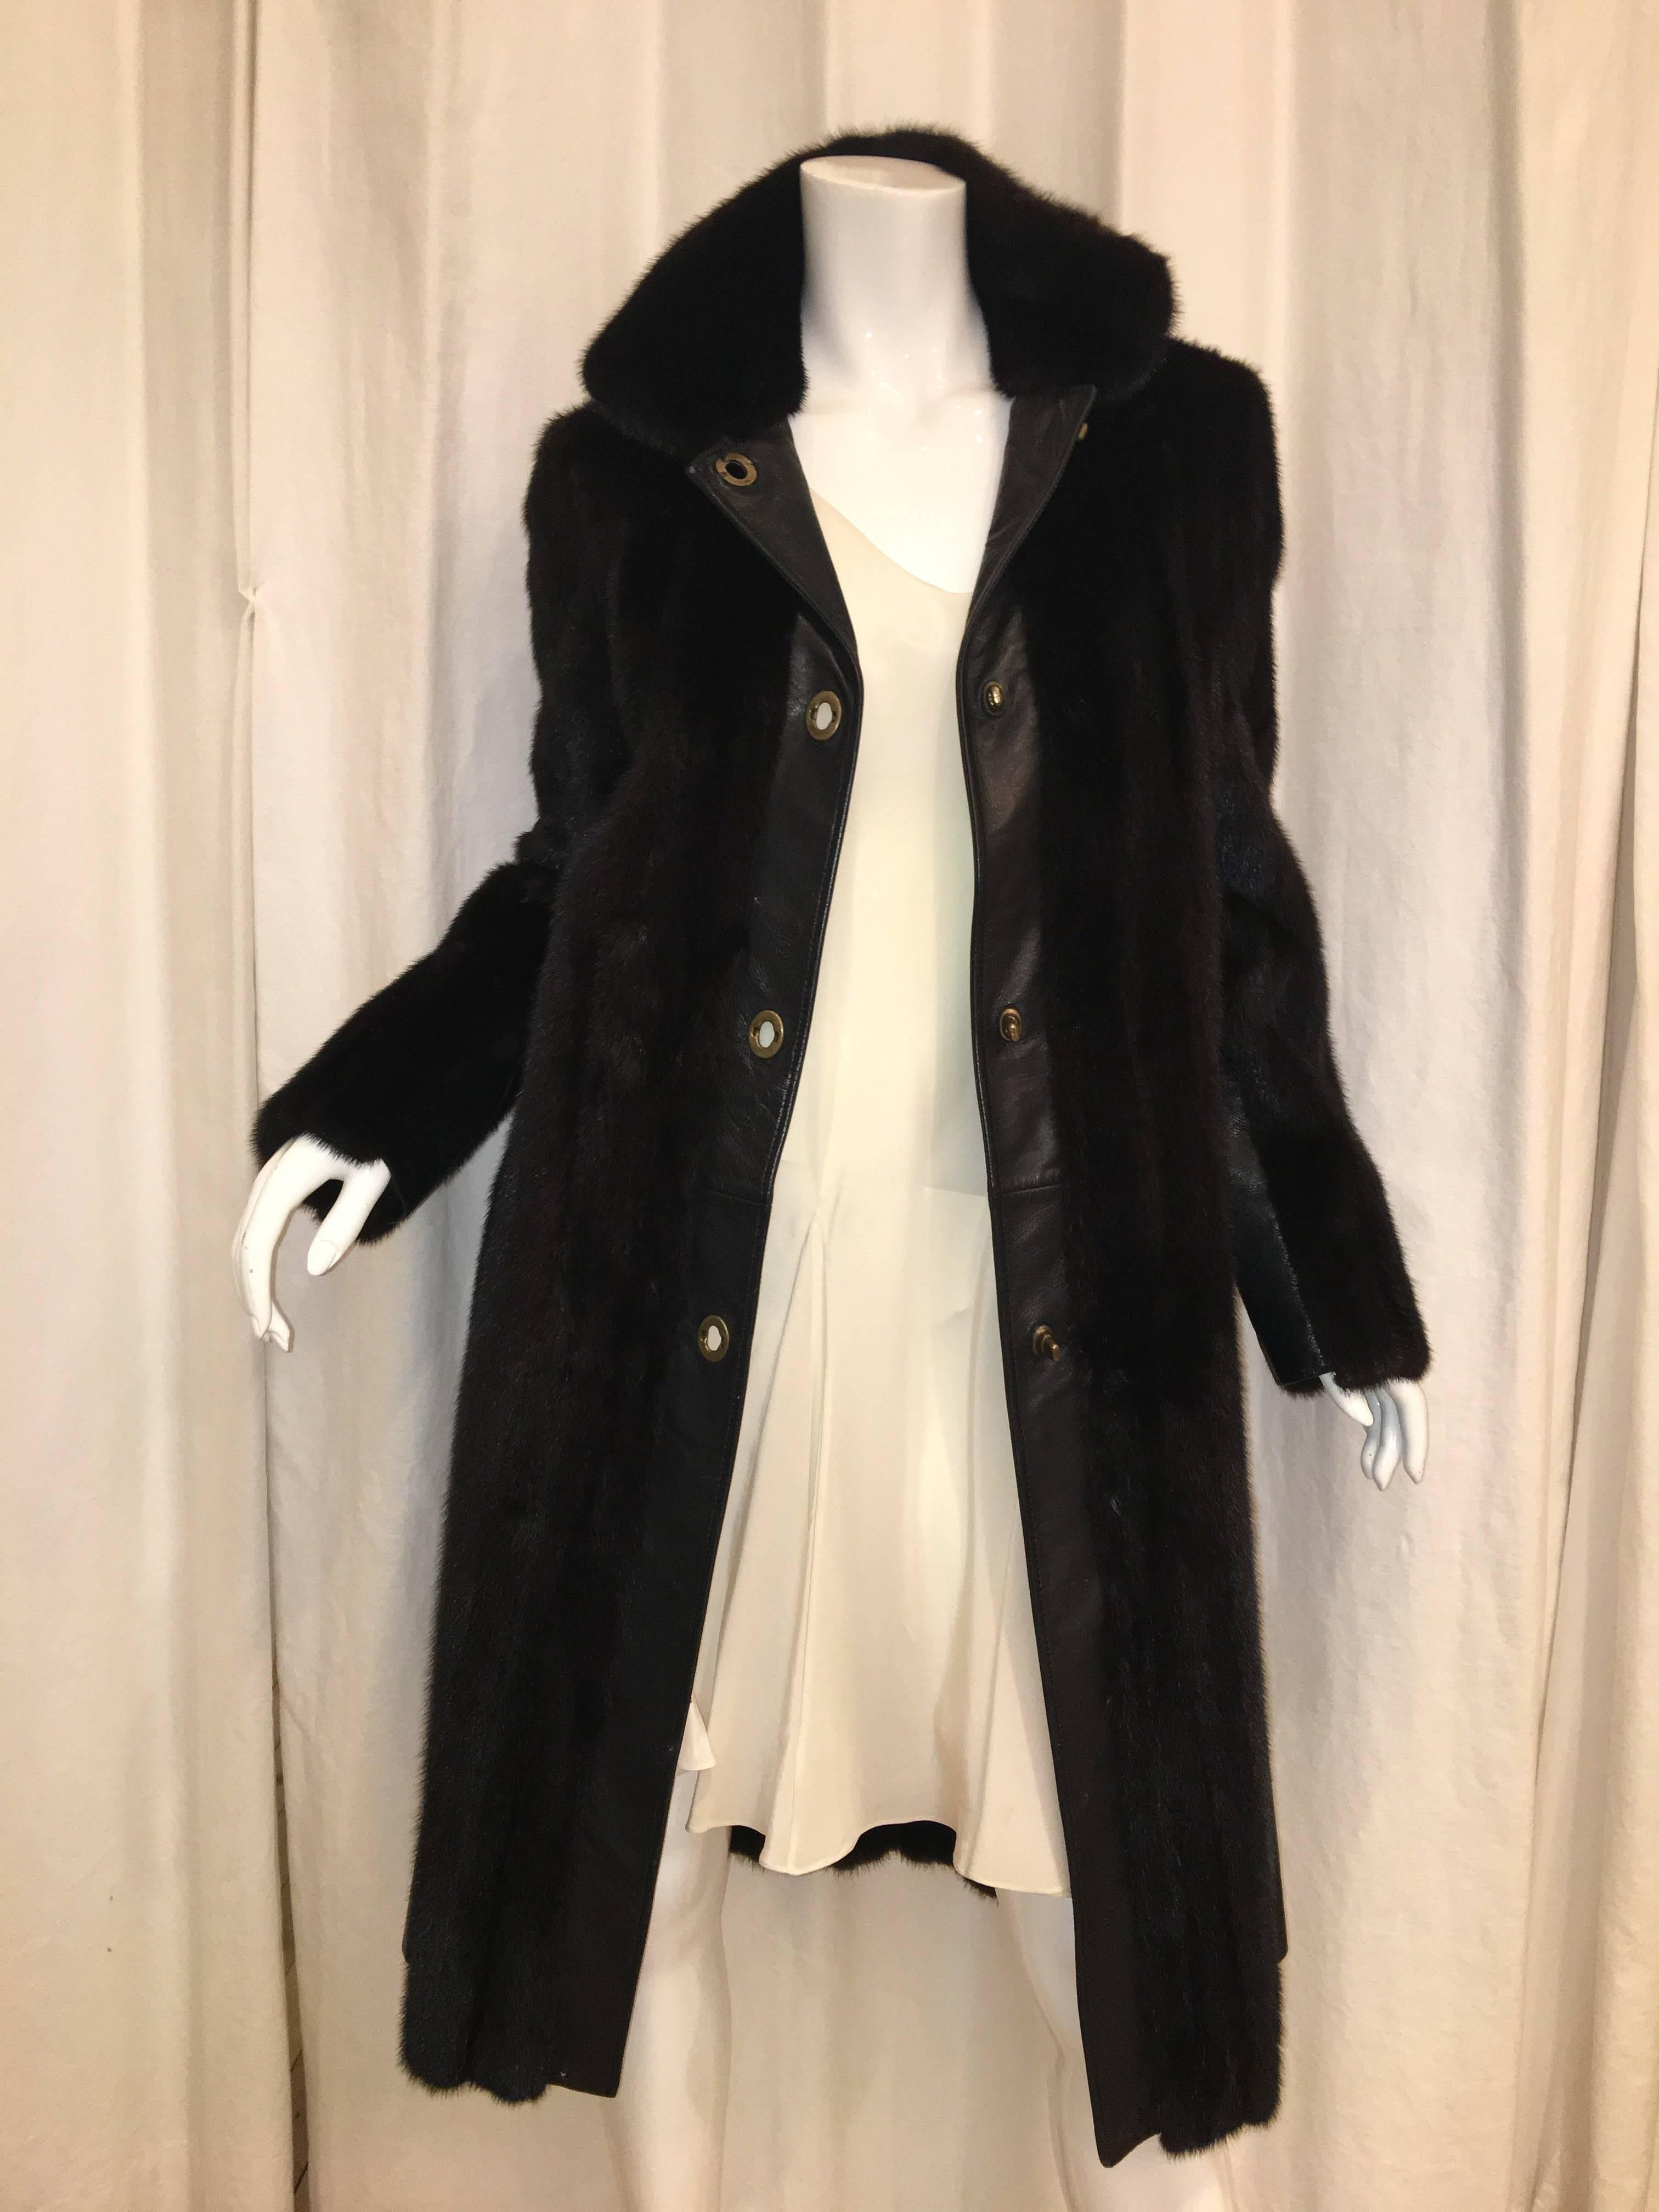 J Mendel Fur Coat with Dark Brown Leather Lining. Long sleeves with Turn Lock Closure. 